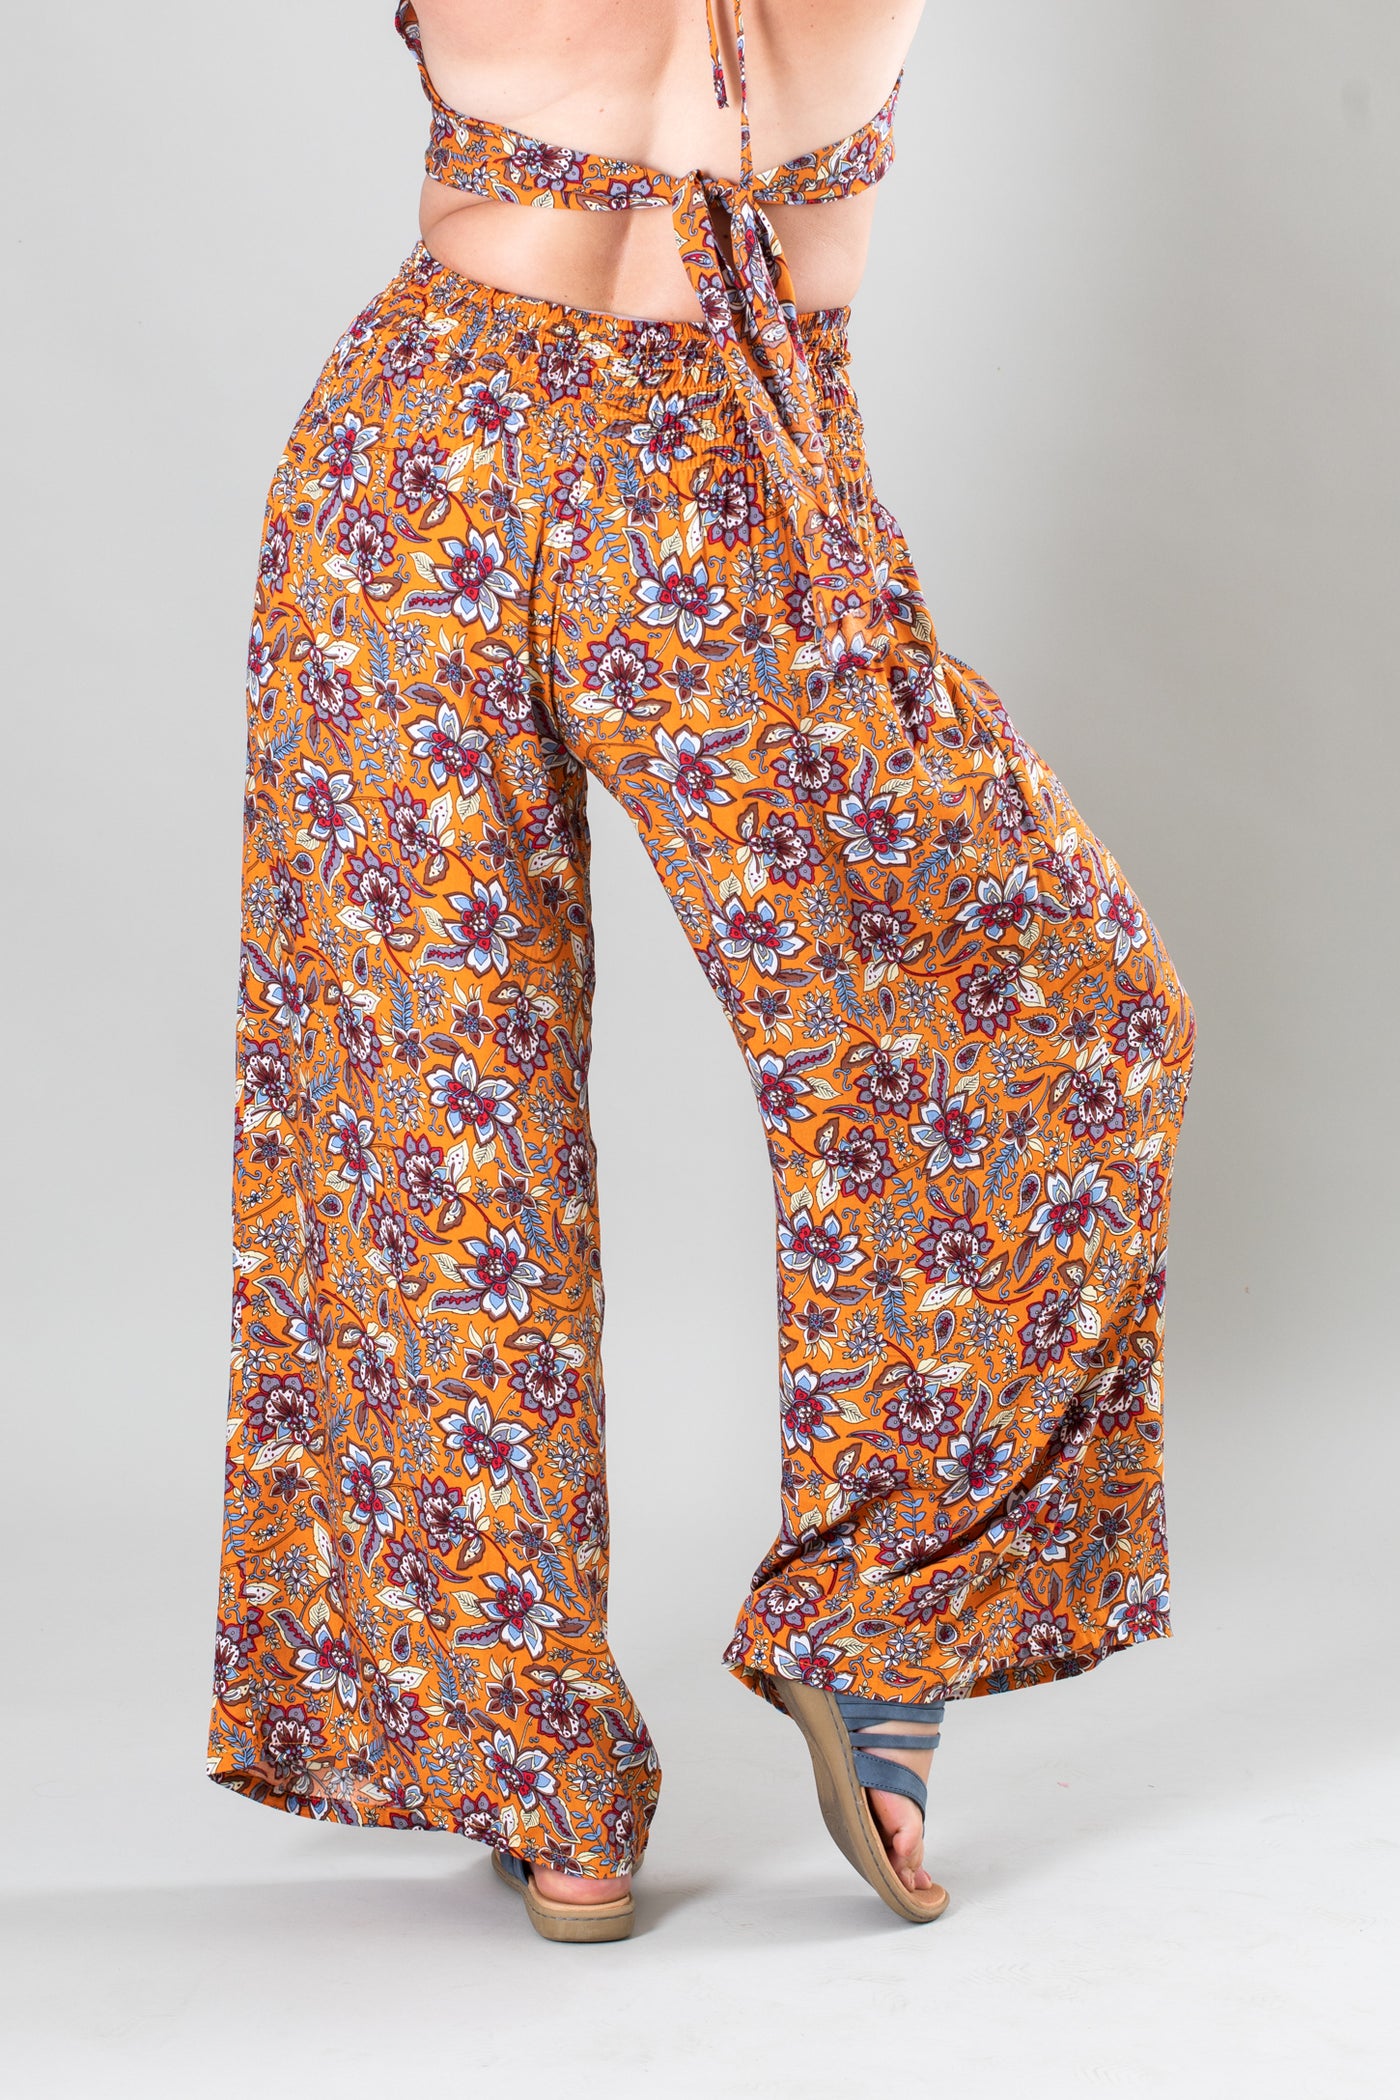 Patterned flowy pants - size large